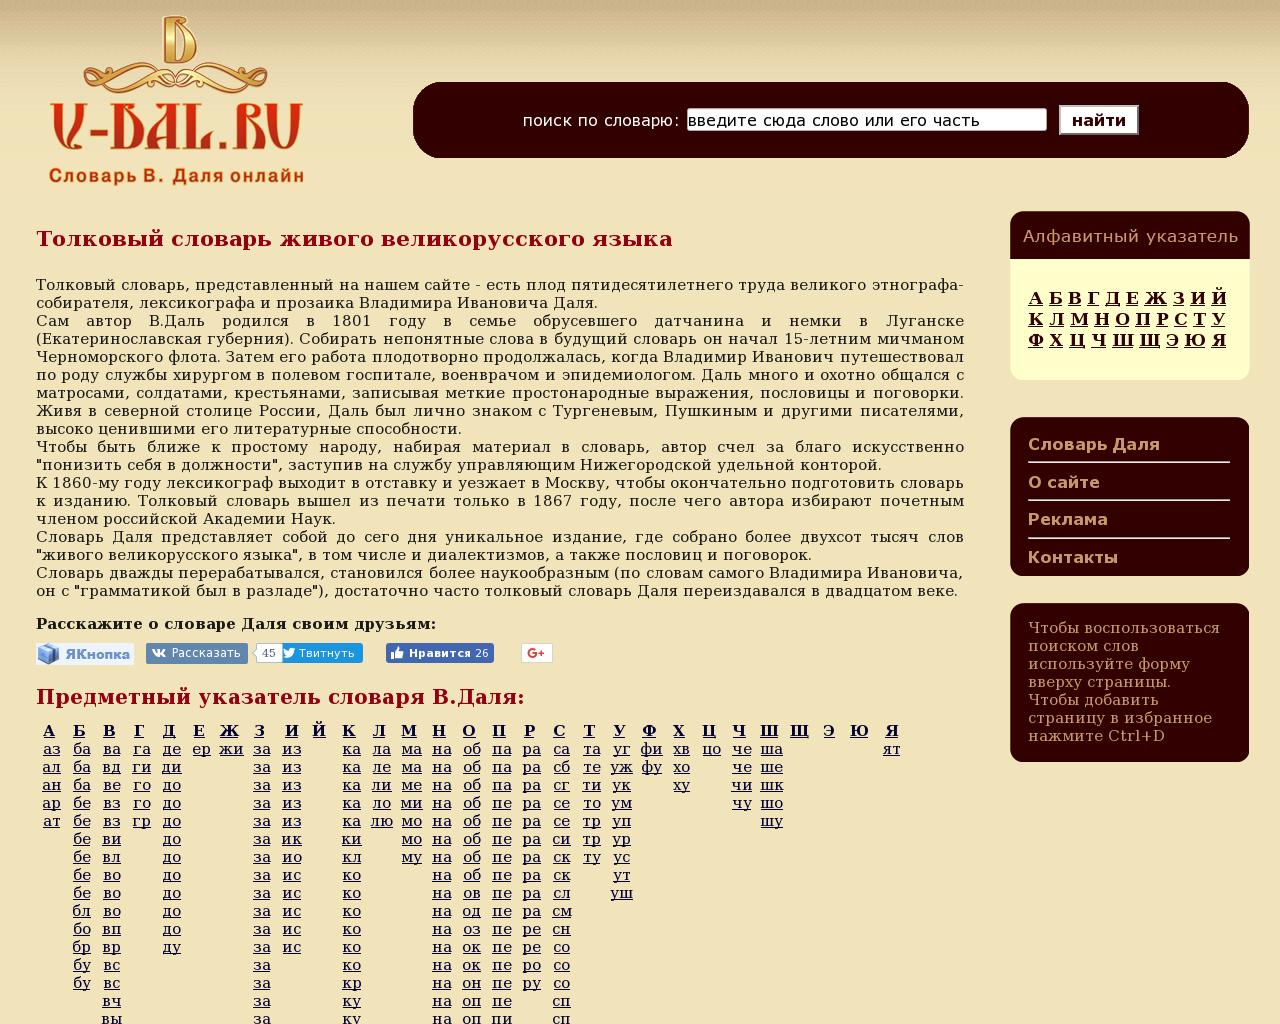 Изображение сайта v-dal.ru в разрешении 1280x1024